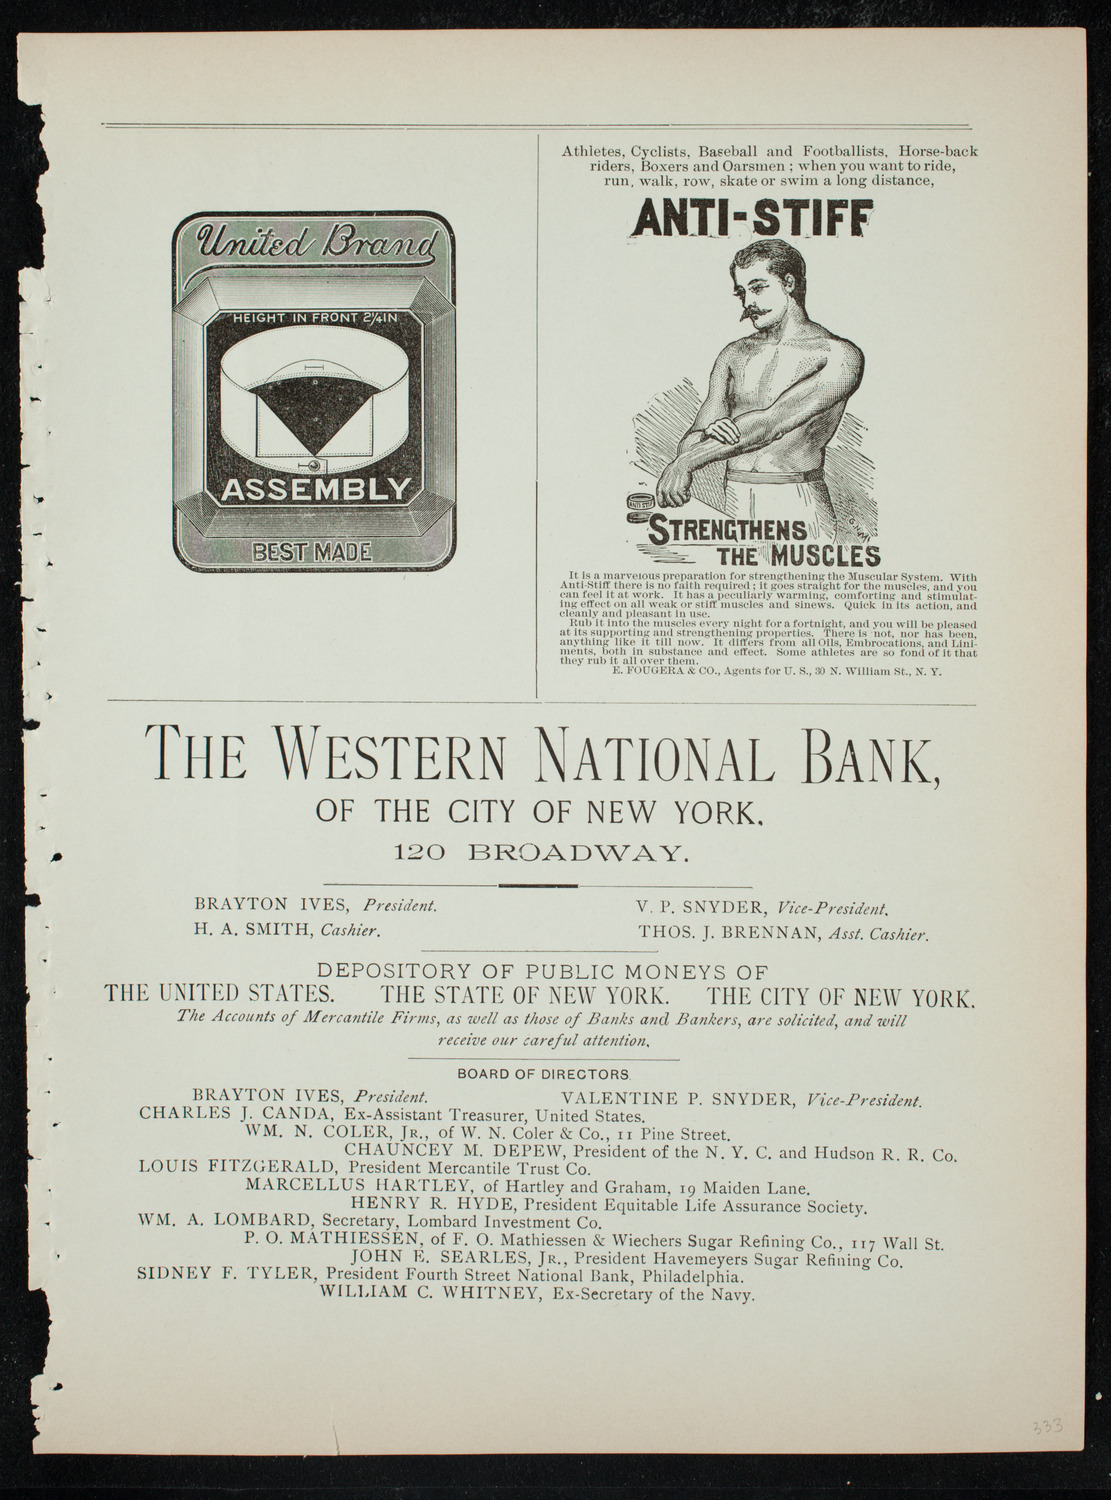 New York Athletic Club Amateur Minstrel Show, December 12, 1891, program page 9